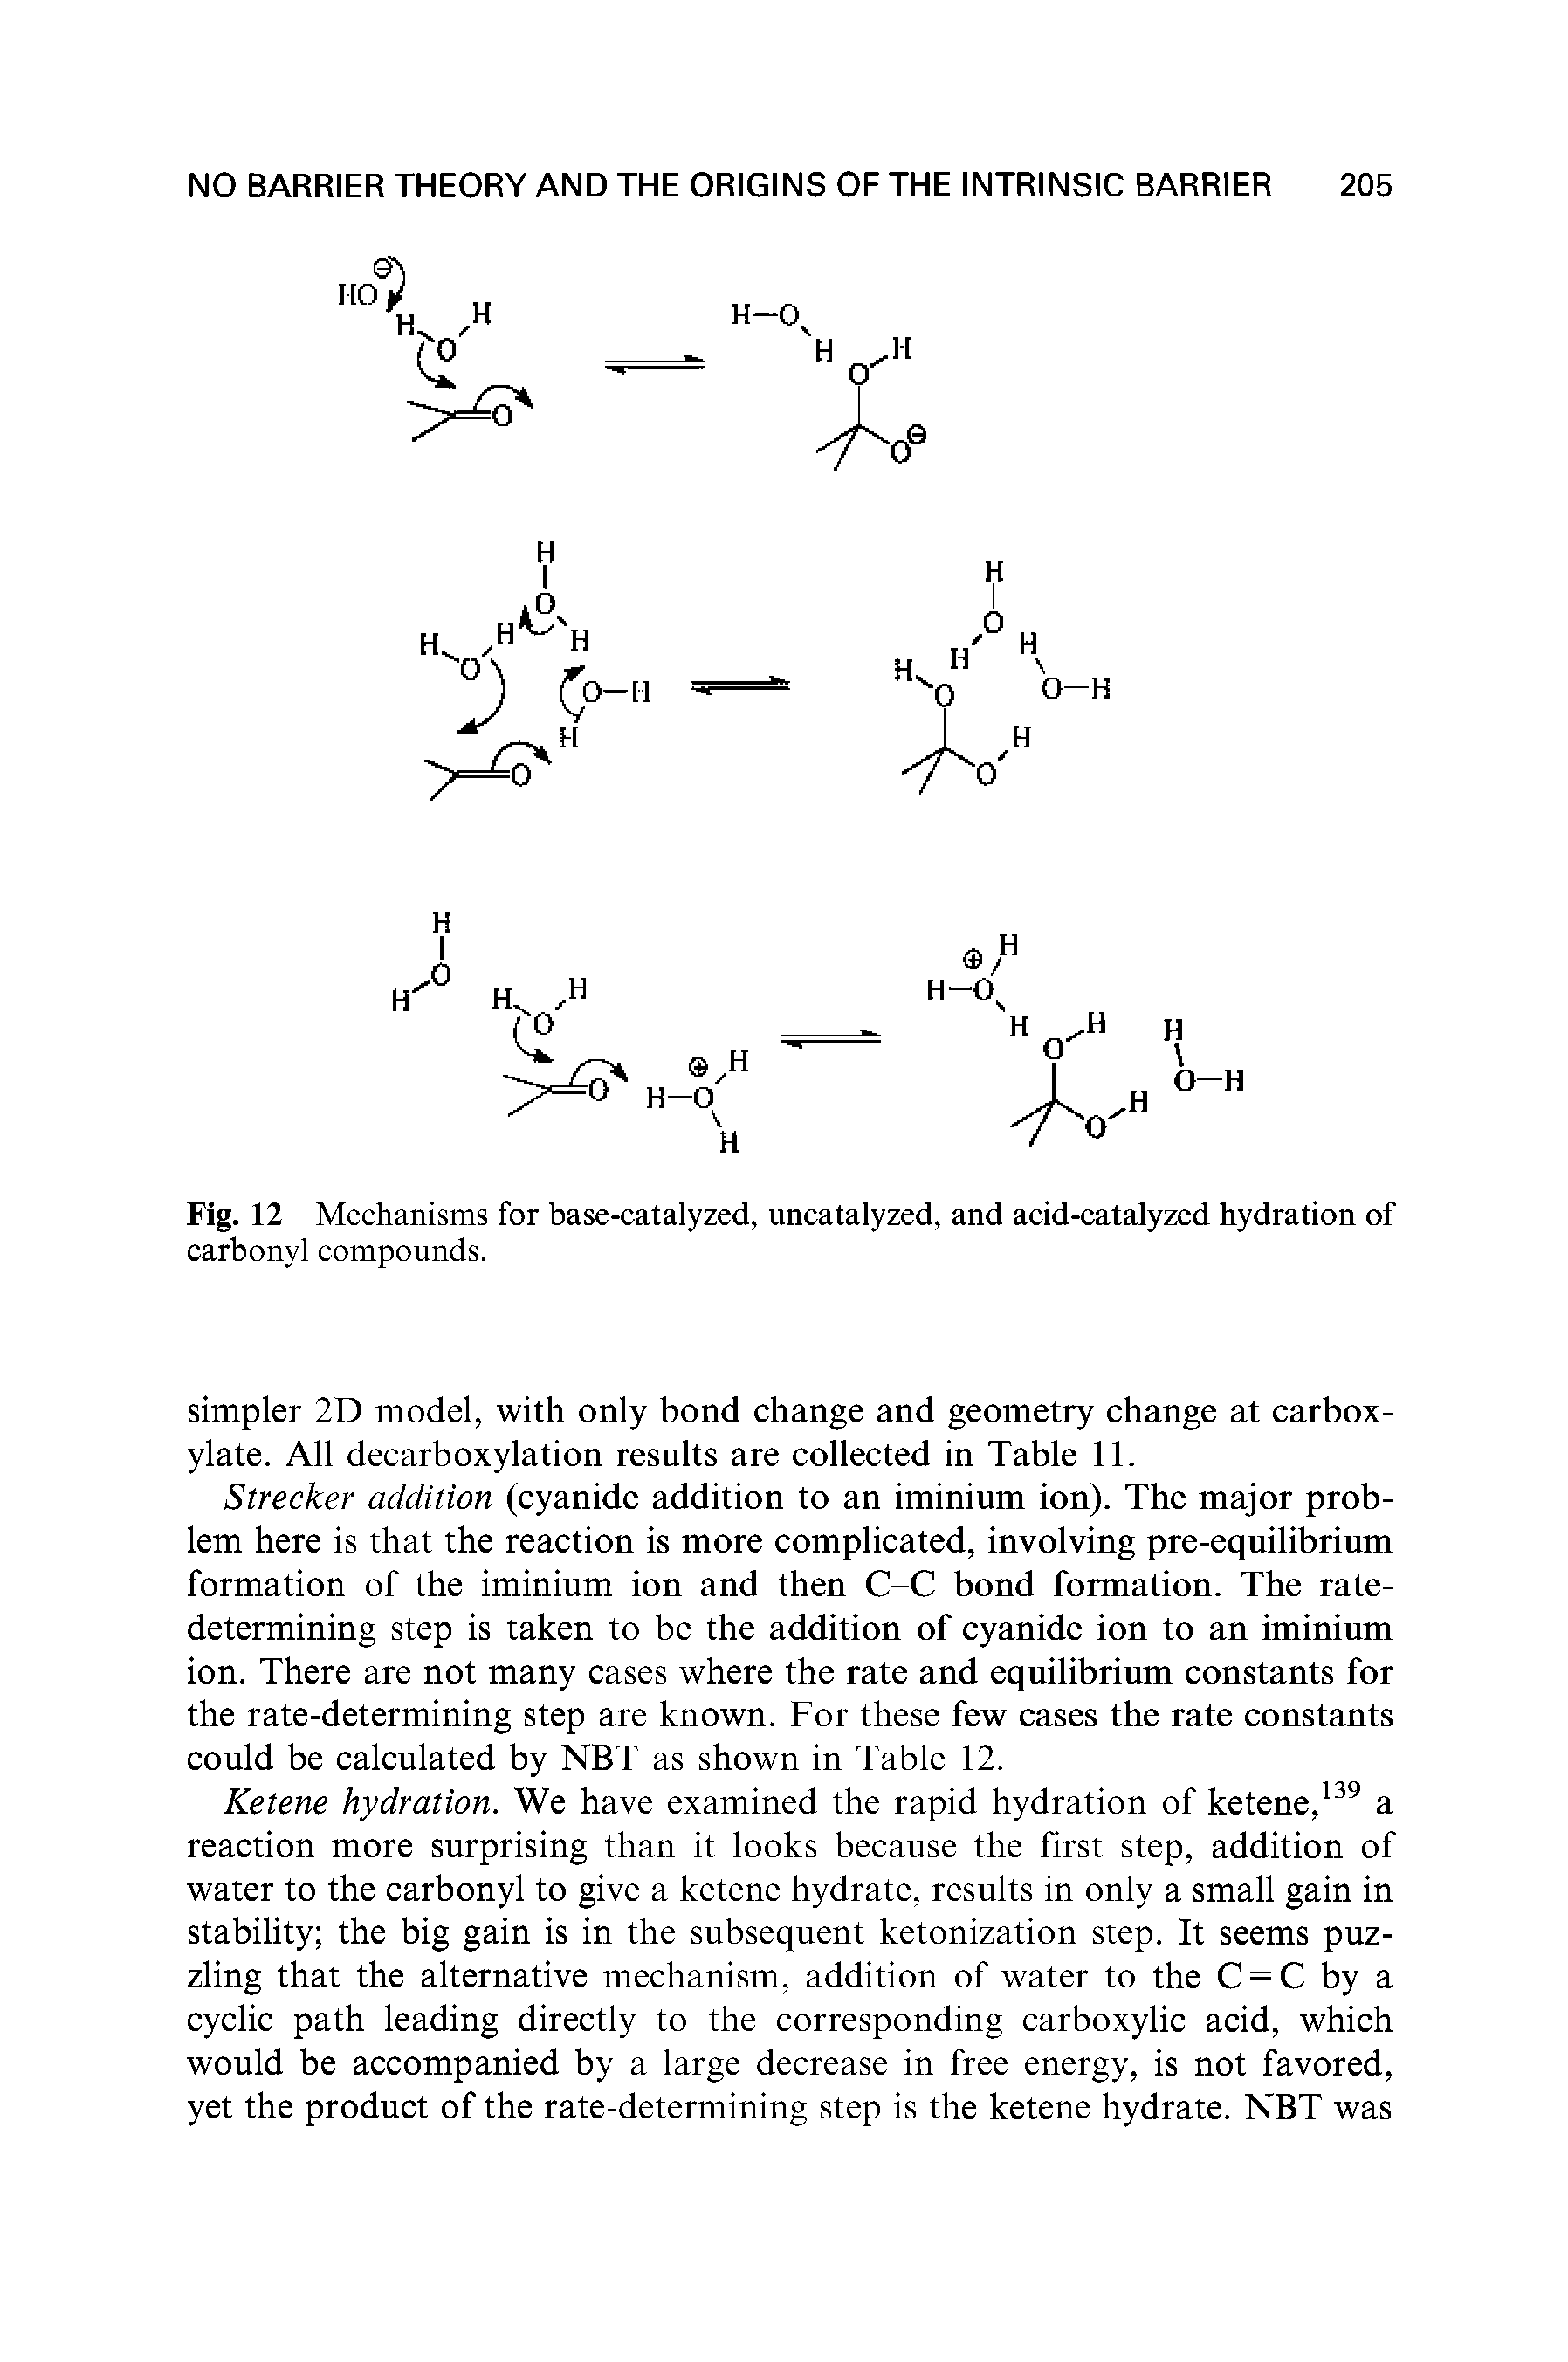 Fig. 12 Mechanisms for base-catalyzed, uncatalyzed, and acid-catalyzed hydration of carbonyl compounds.